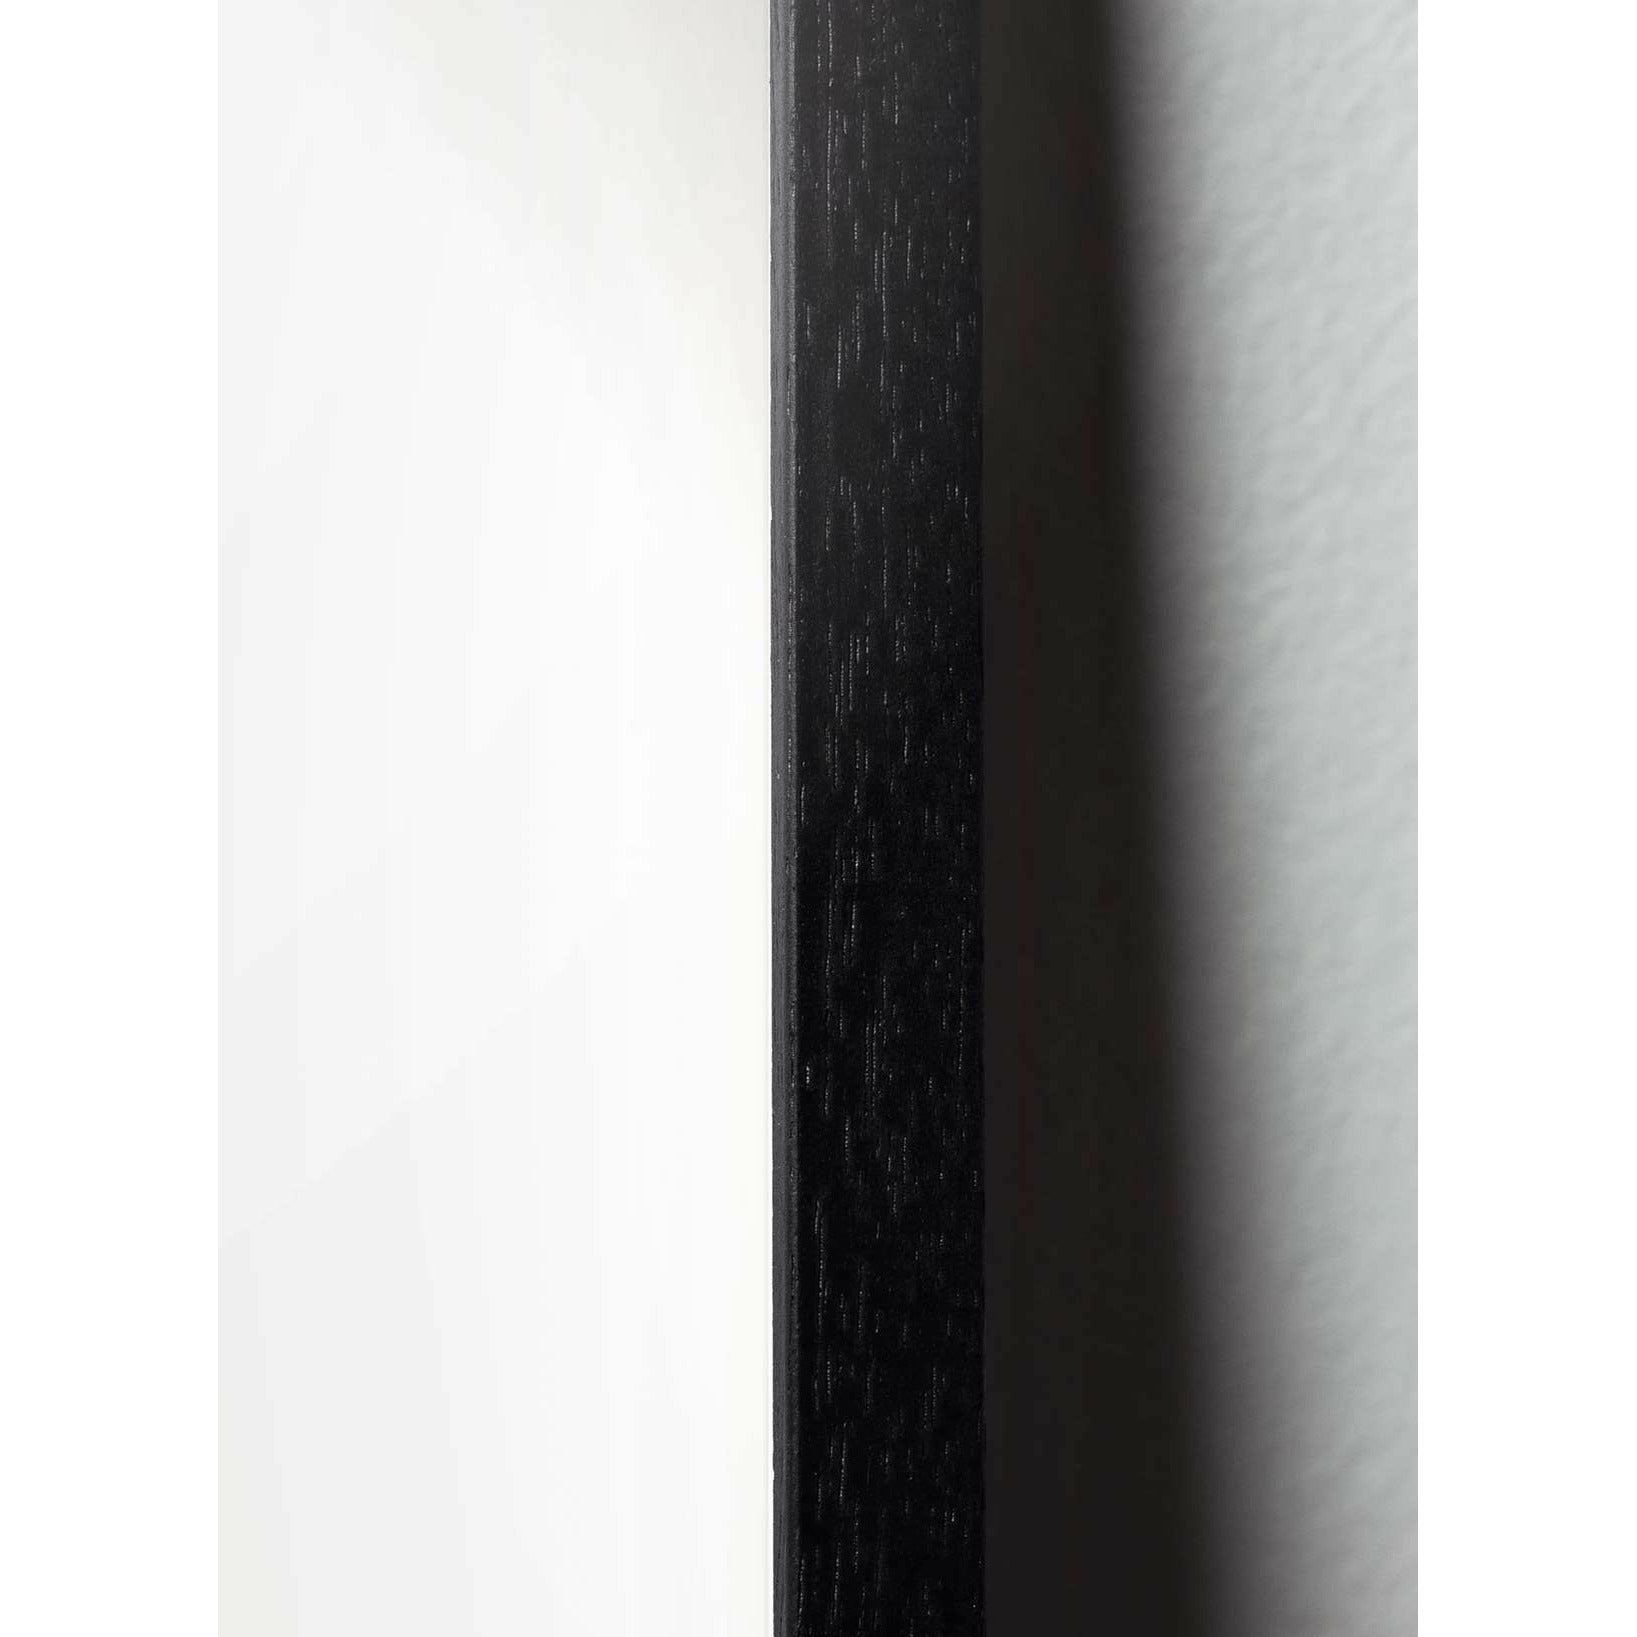 Brainchild Äggklassisk affisch, ram i svart målat trä 50x70 cm, svart bakgrund